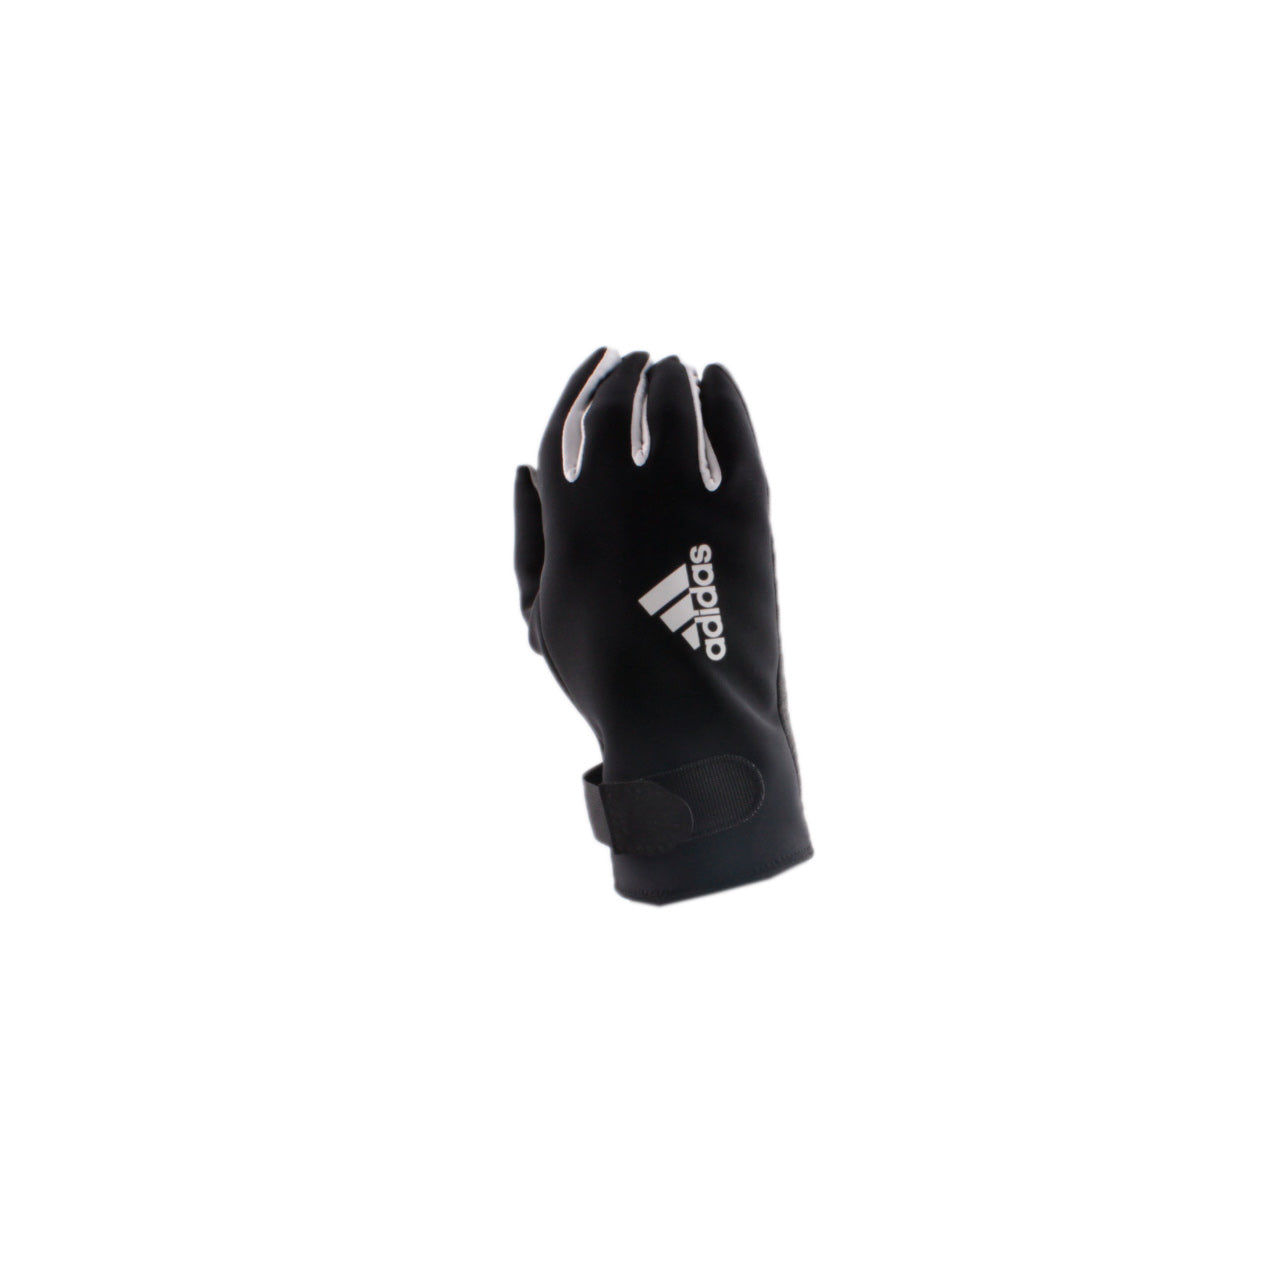 Adidas Cross V13 Handschuhe Glove X-Country Glove Biathlon Alkantara M65420 6,5